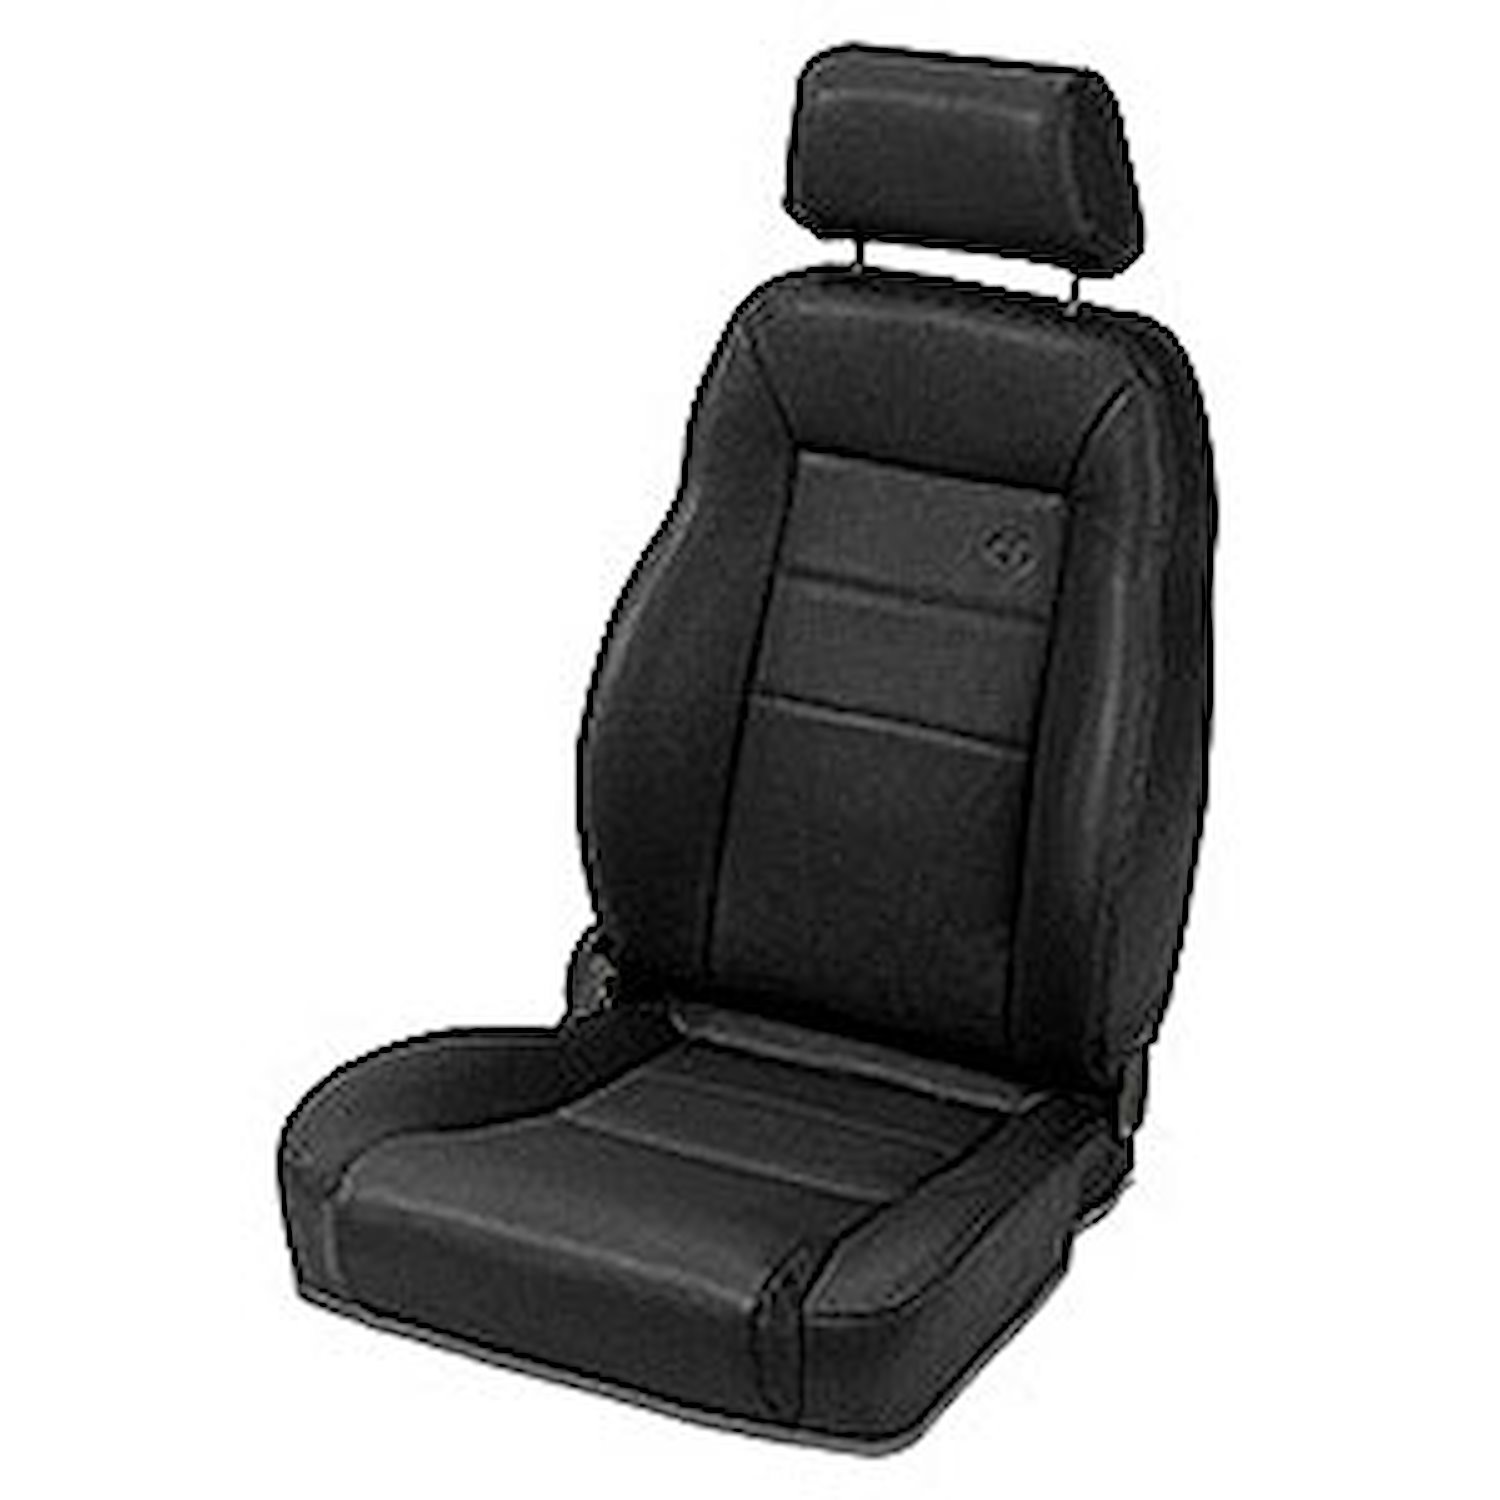 Trailmax II Pro Seat, Black Denim, Front, High-Back, Vinyl, Premium Bucket, Passenger Side,